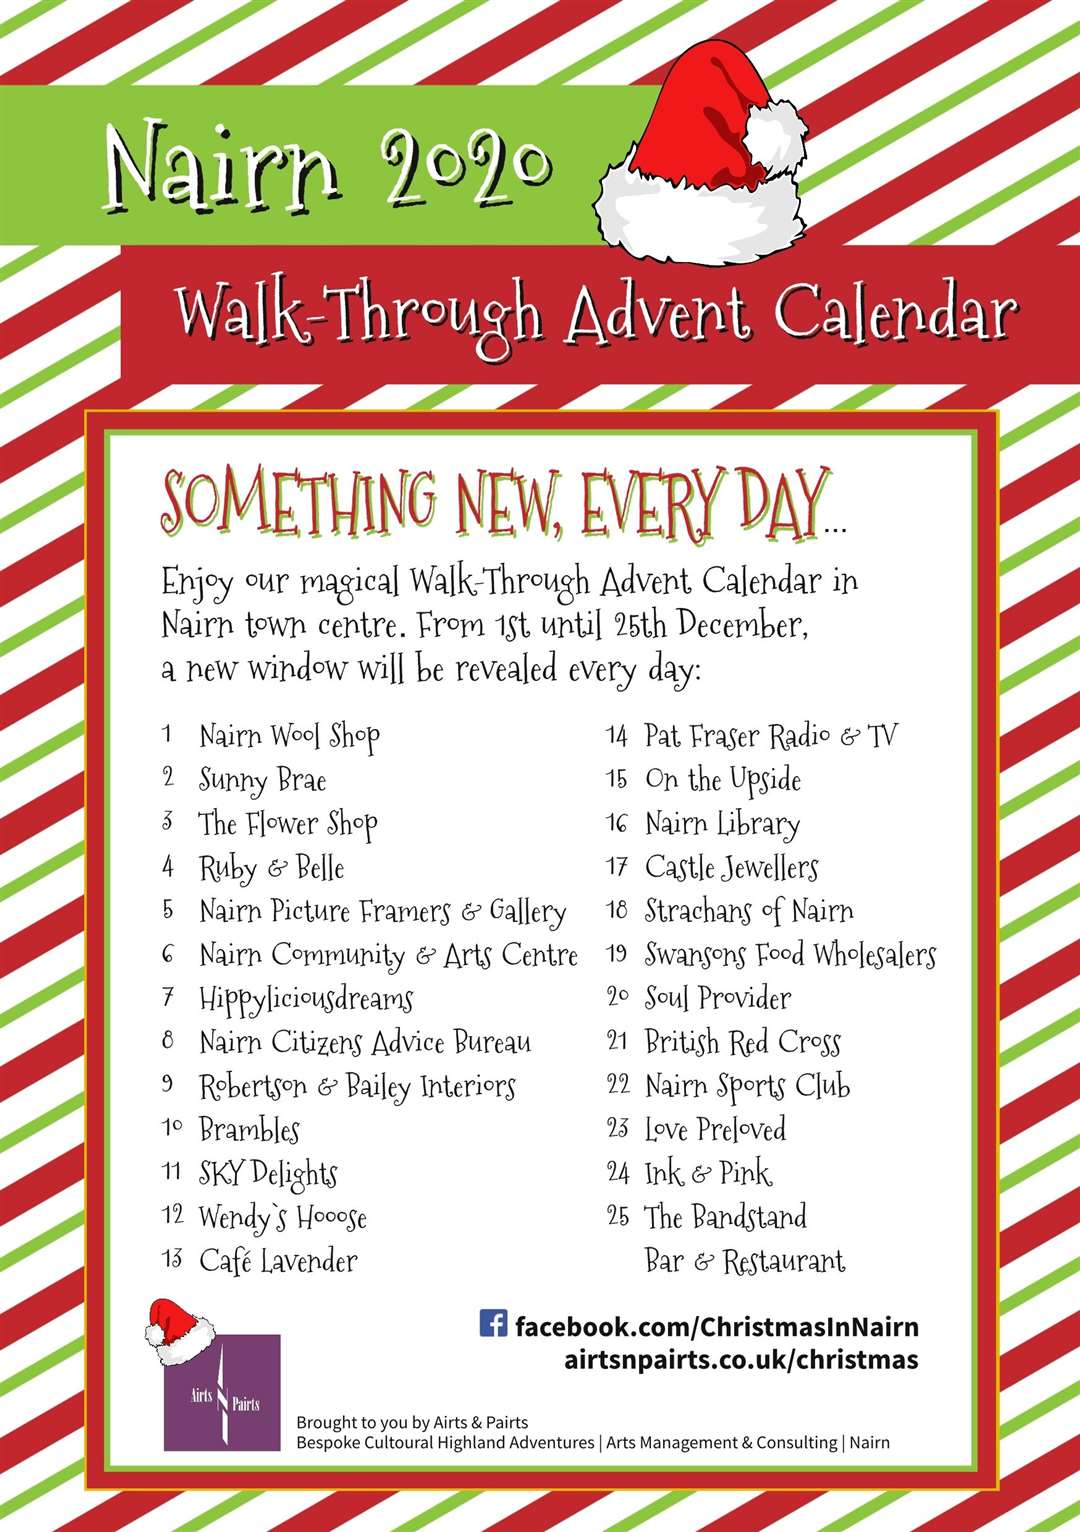 The poster for the Walk-Through Advent Calendar.